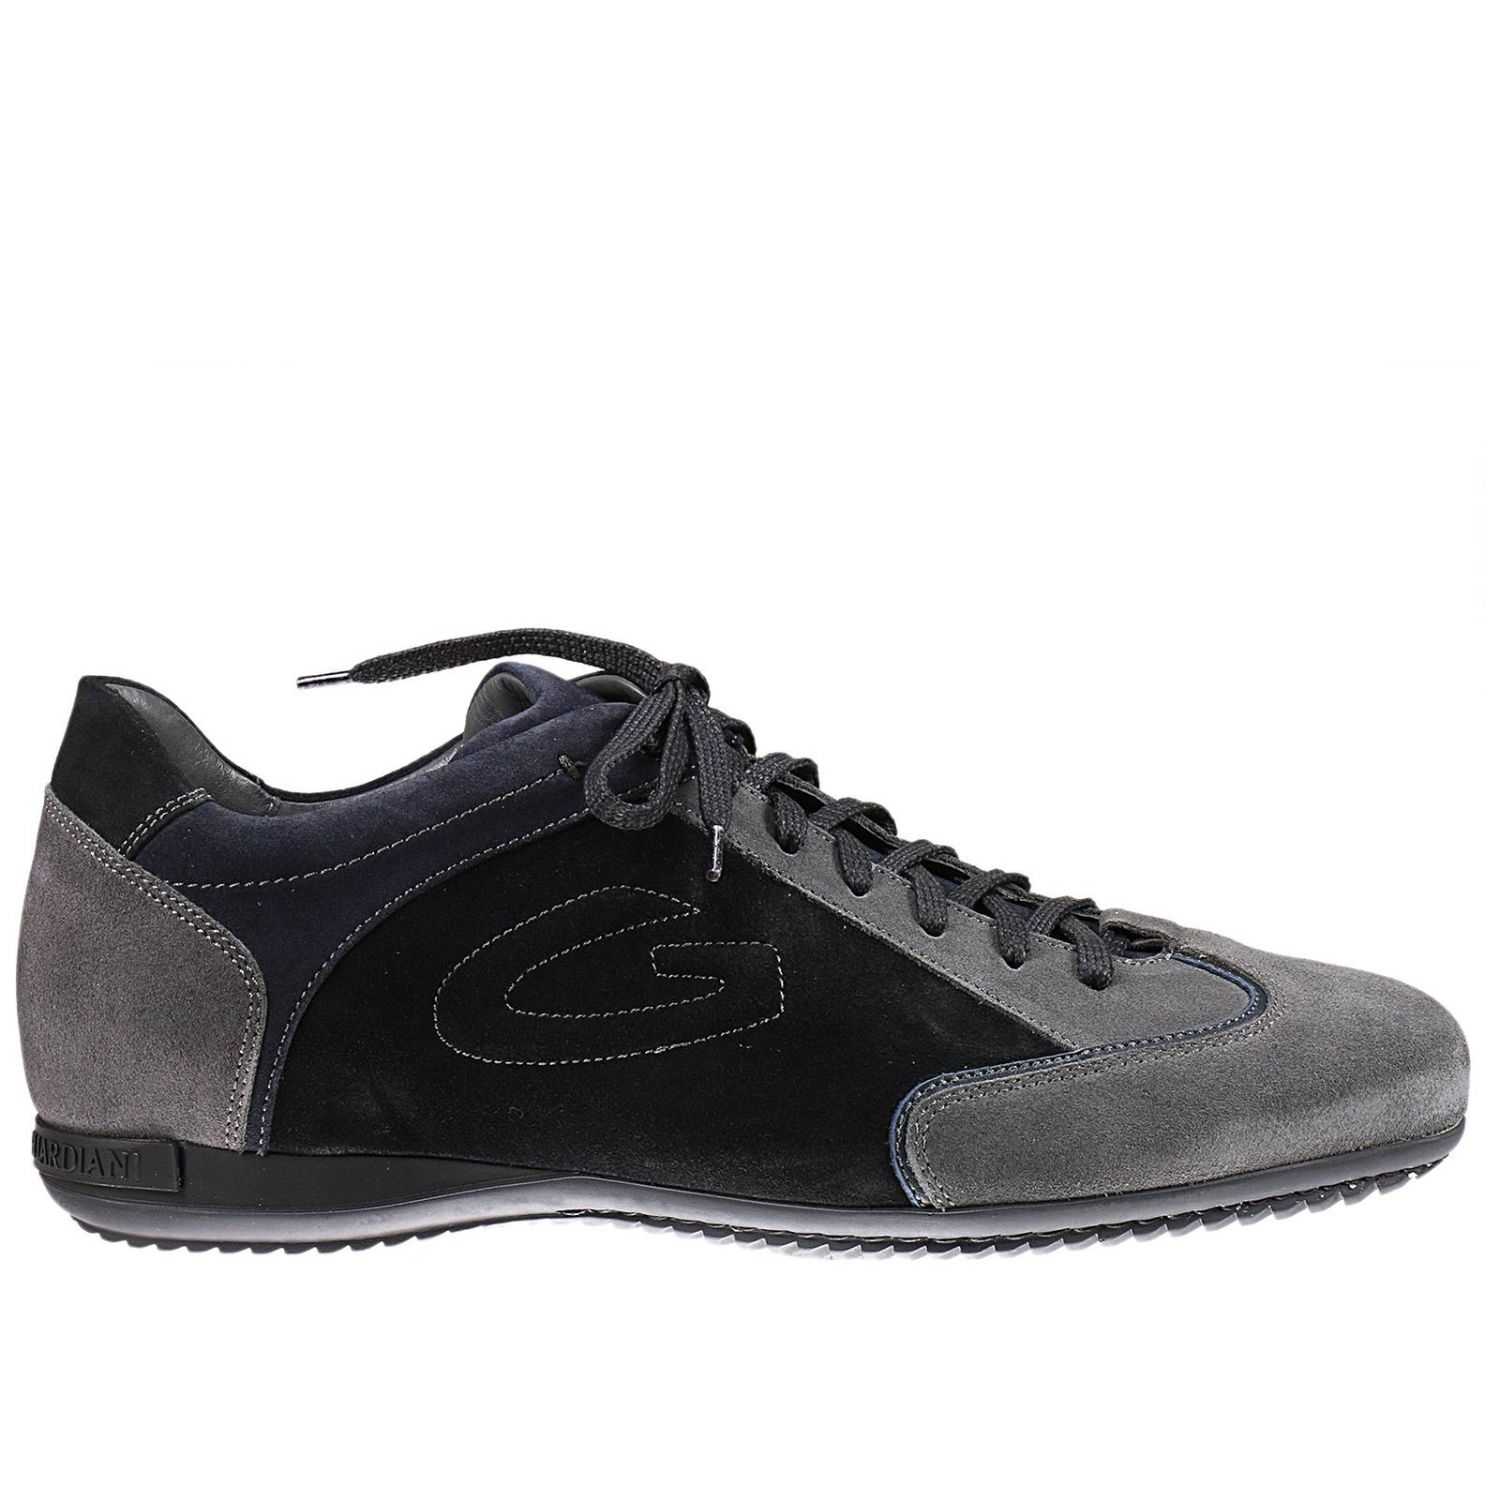 guardiani sport shoes